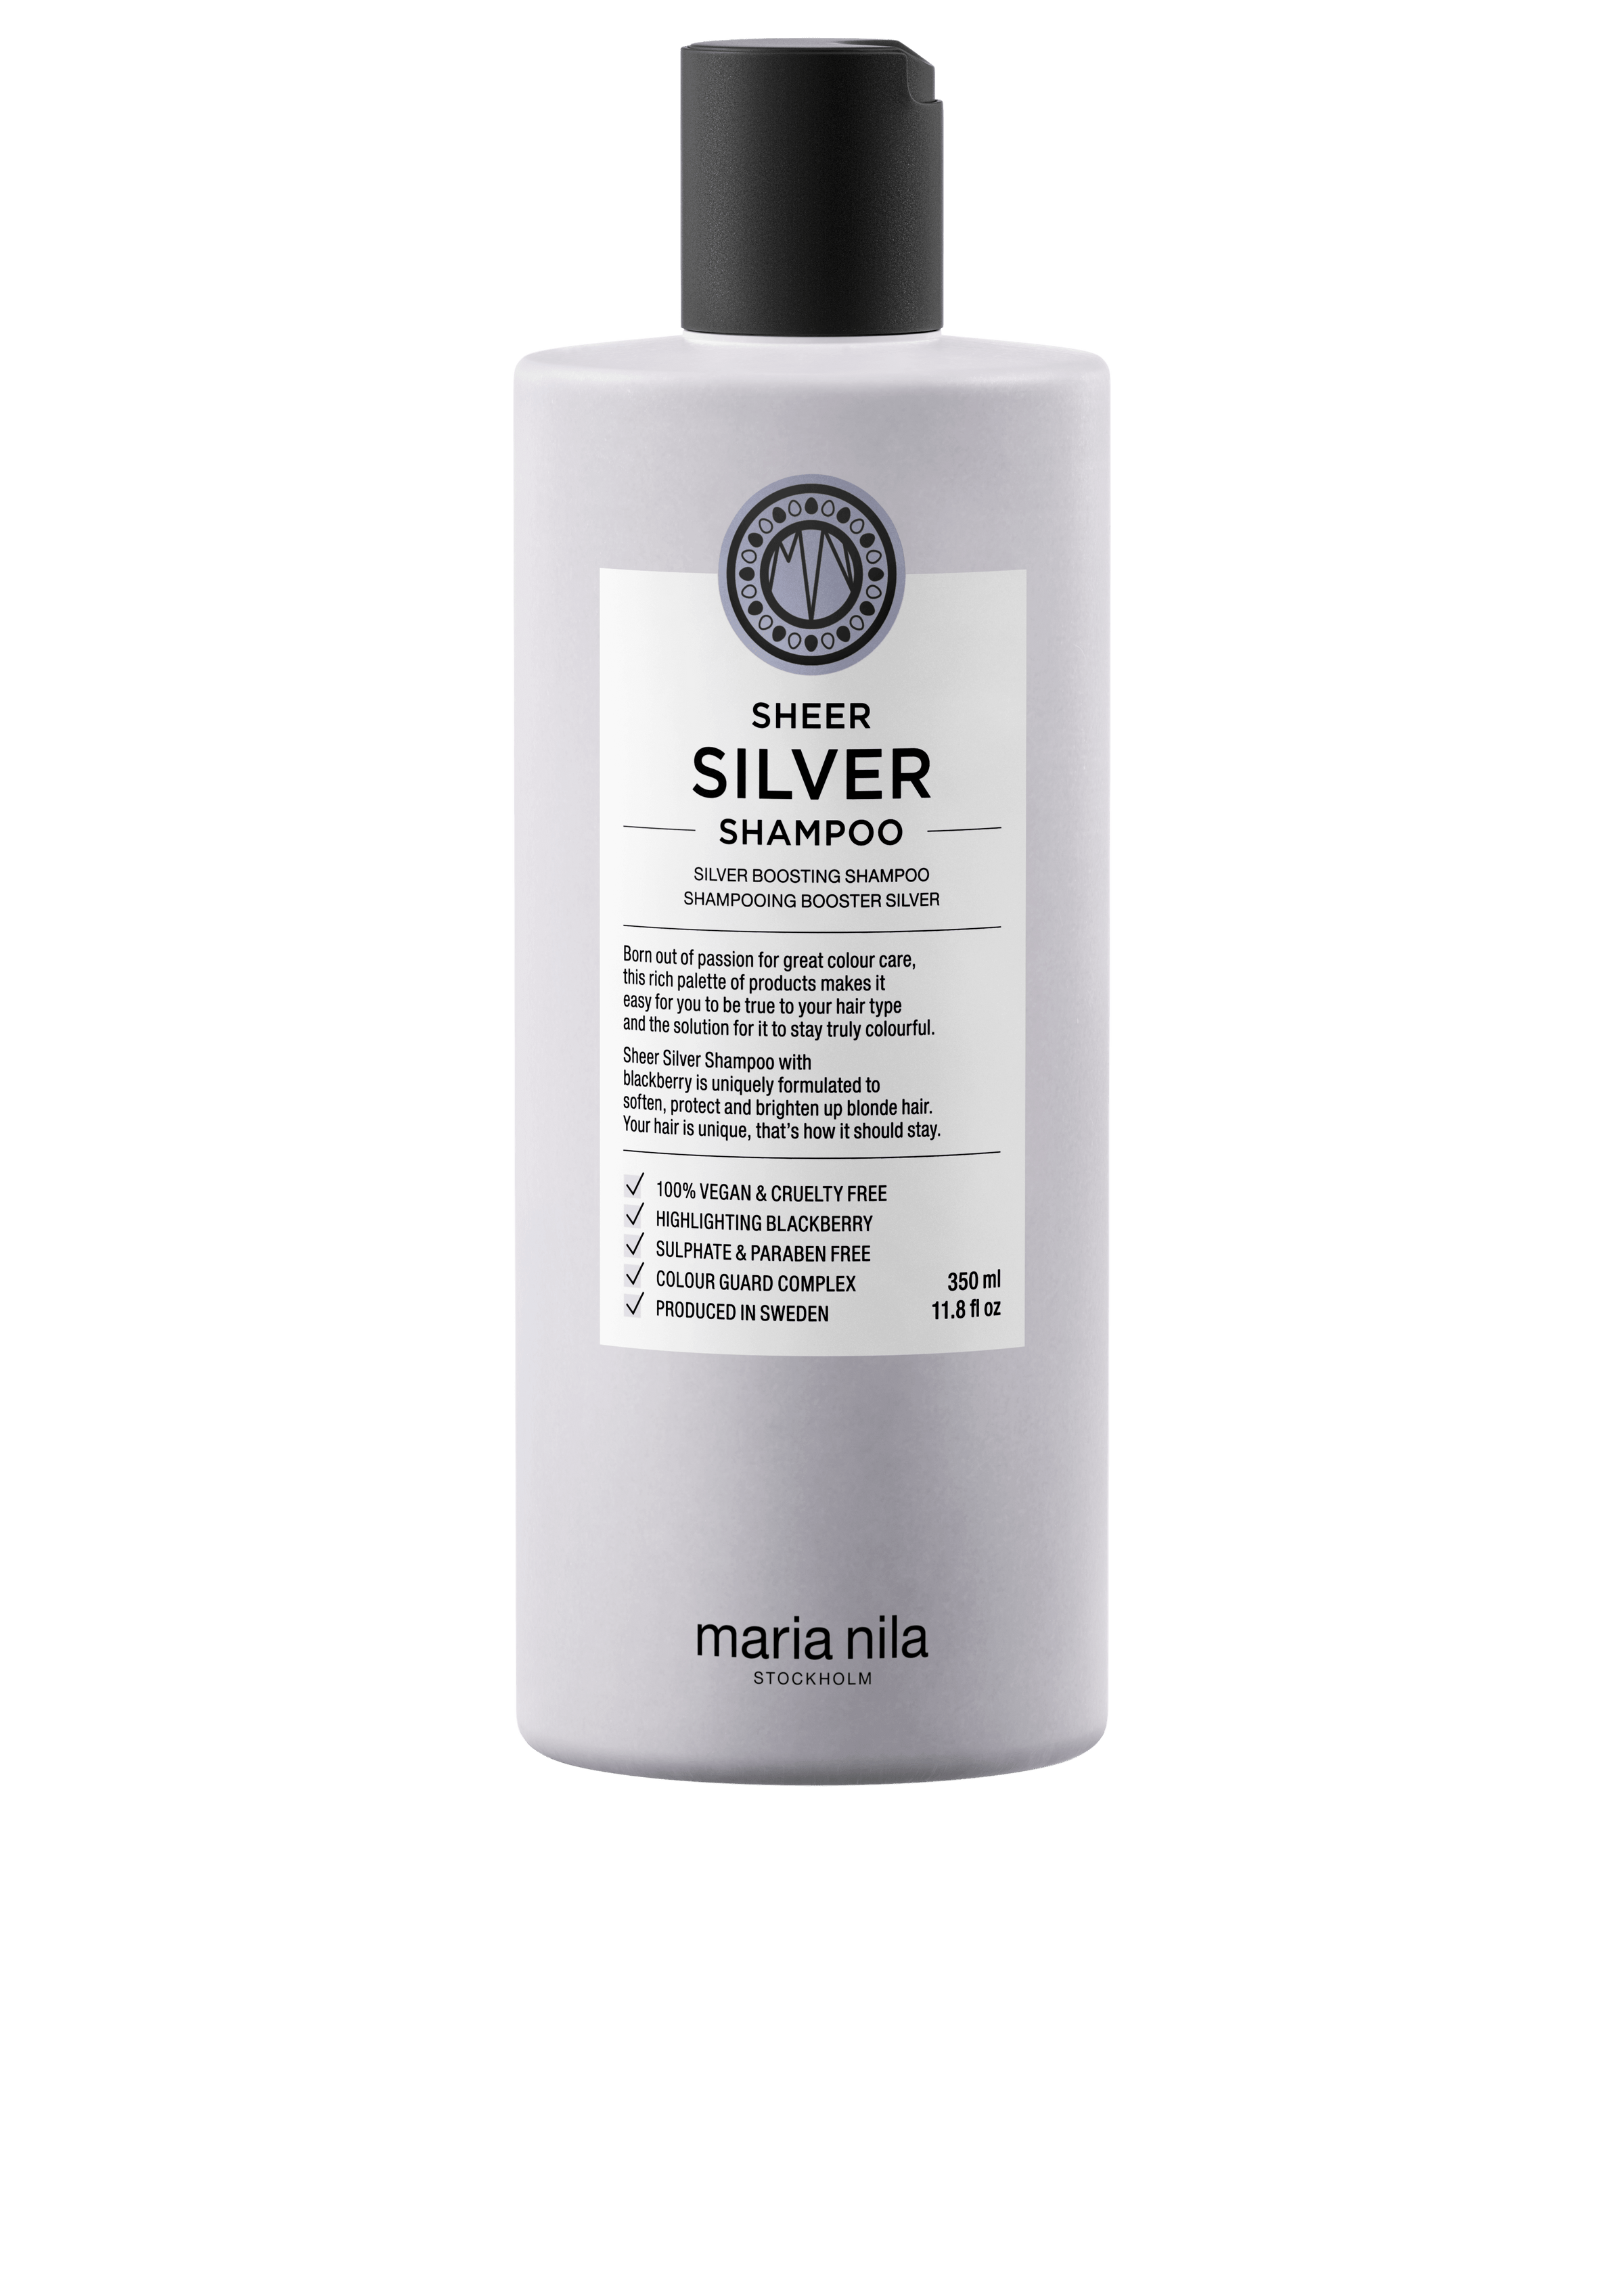 Sheer Shampoo – The Coloroom